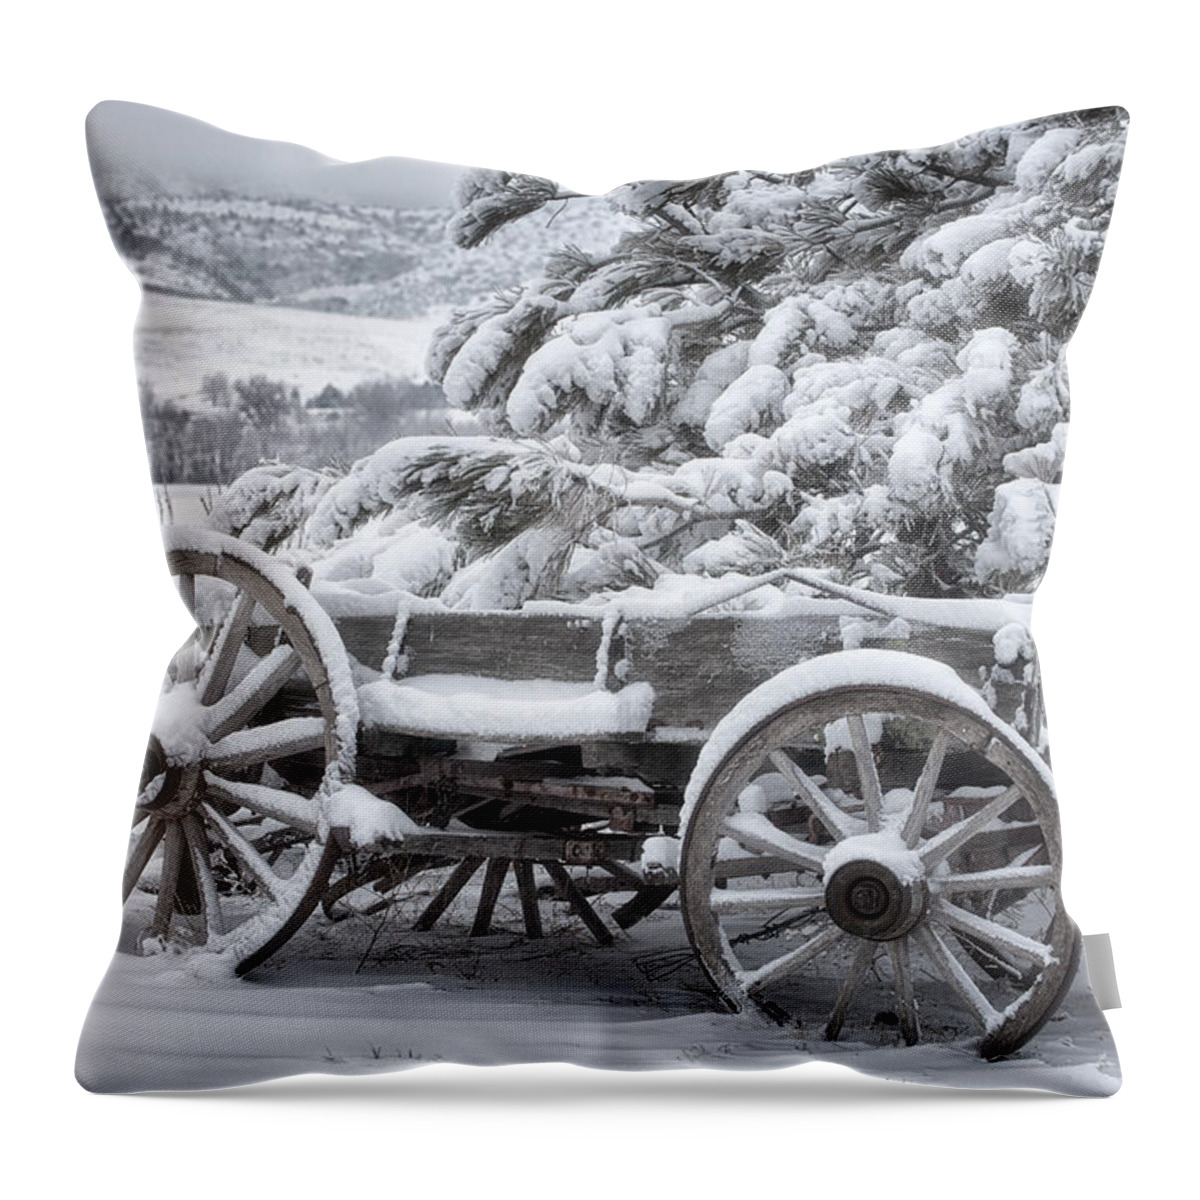 Snow Throw Pillow featuring the photograph Colorado Wagon by Darren White